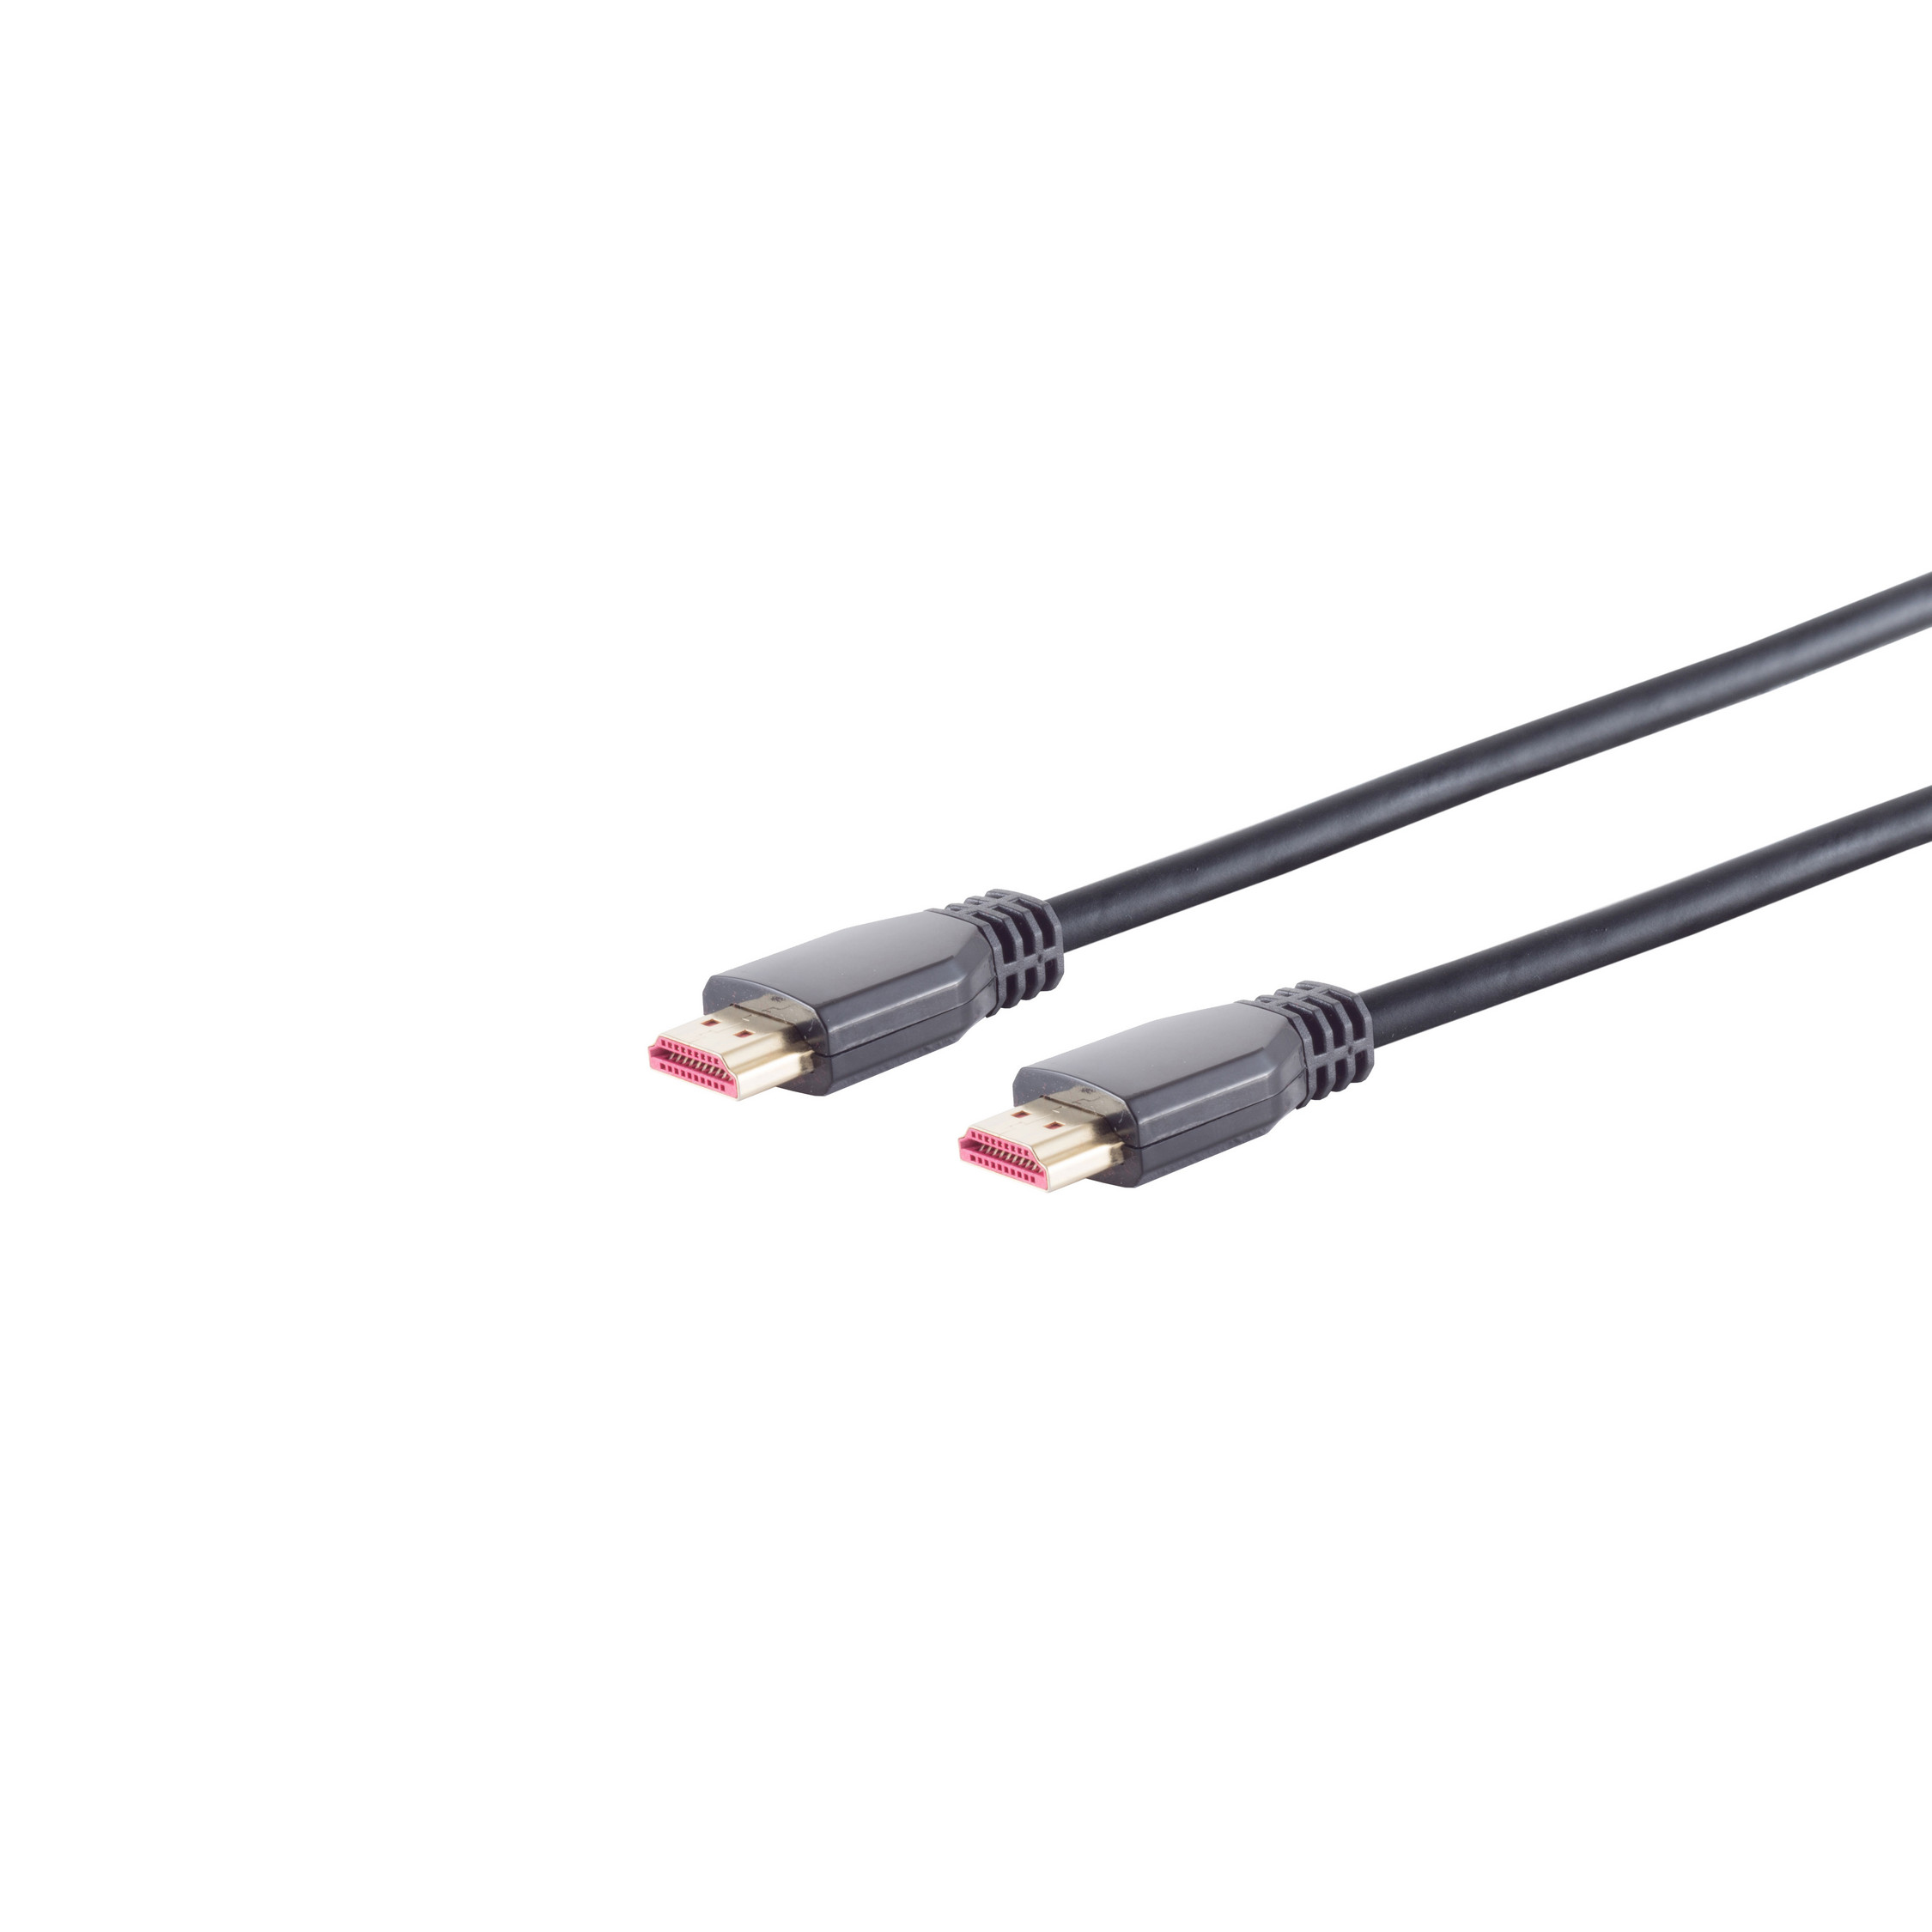 S/CONN MAXIMUM Kabel, Ultra HDMI ABS, 8K, CONNECTIVITY schwarz, HDMI 1,5m Kabel